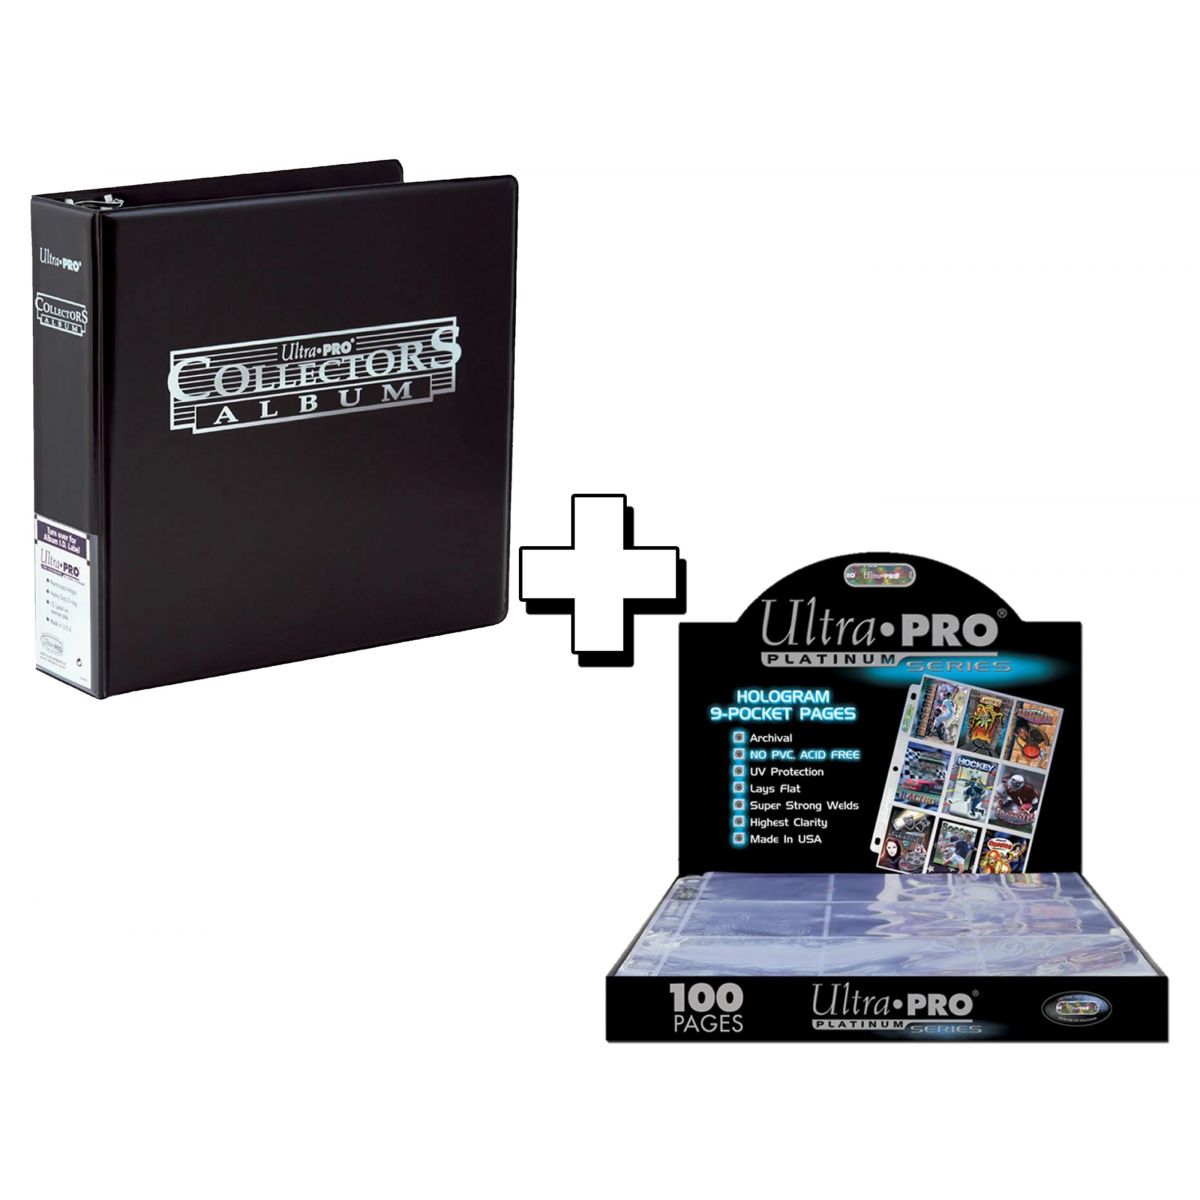 Item Ultra Pro - Pack - Collectors Ring Binder Album Black + 100 Platinum Pages